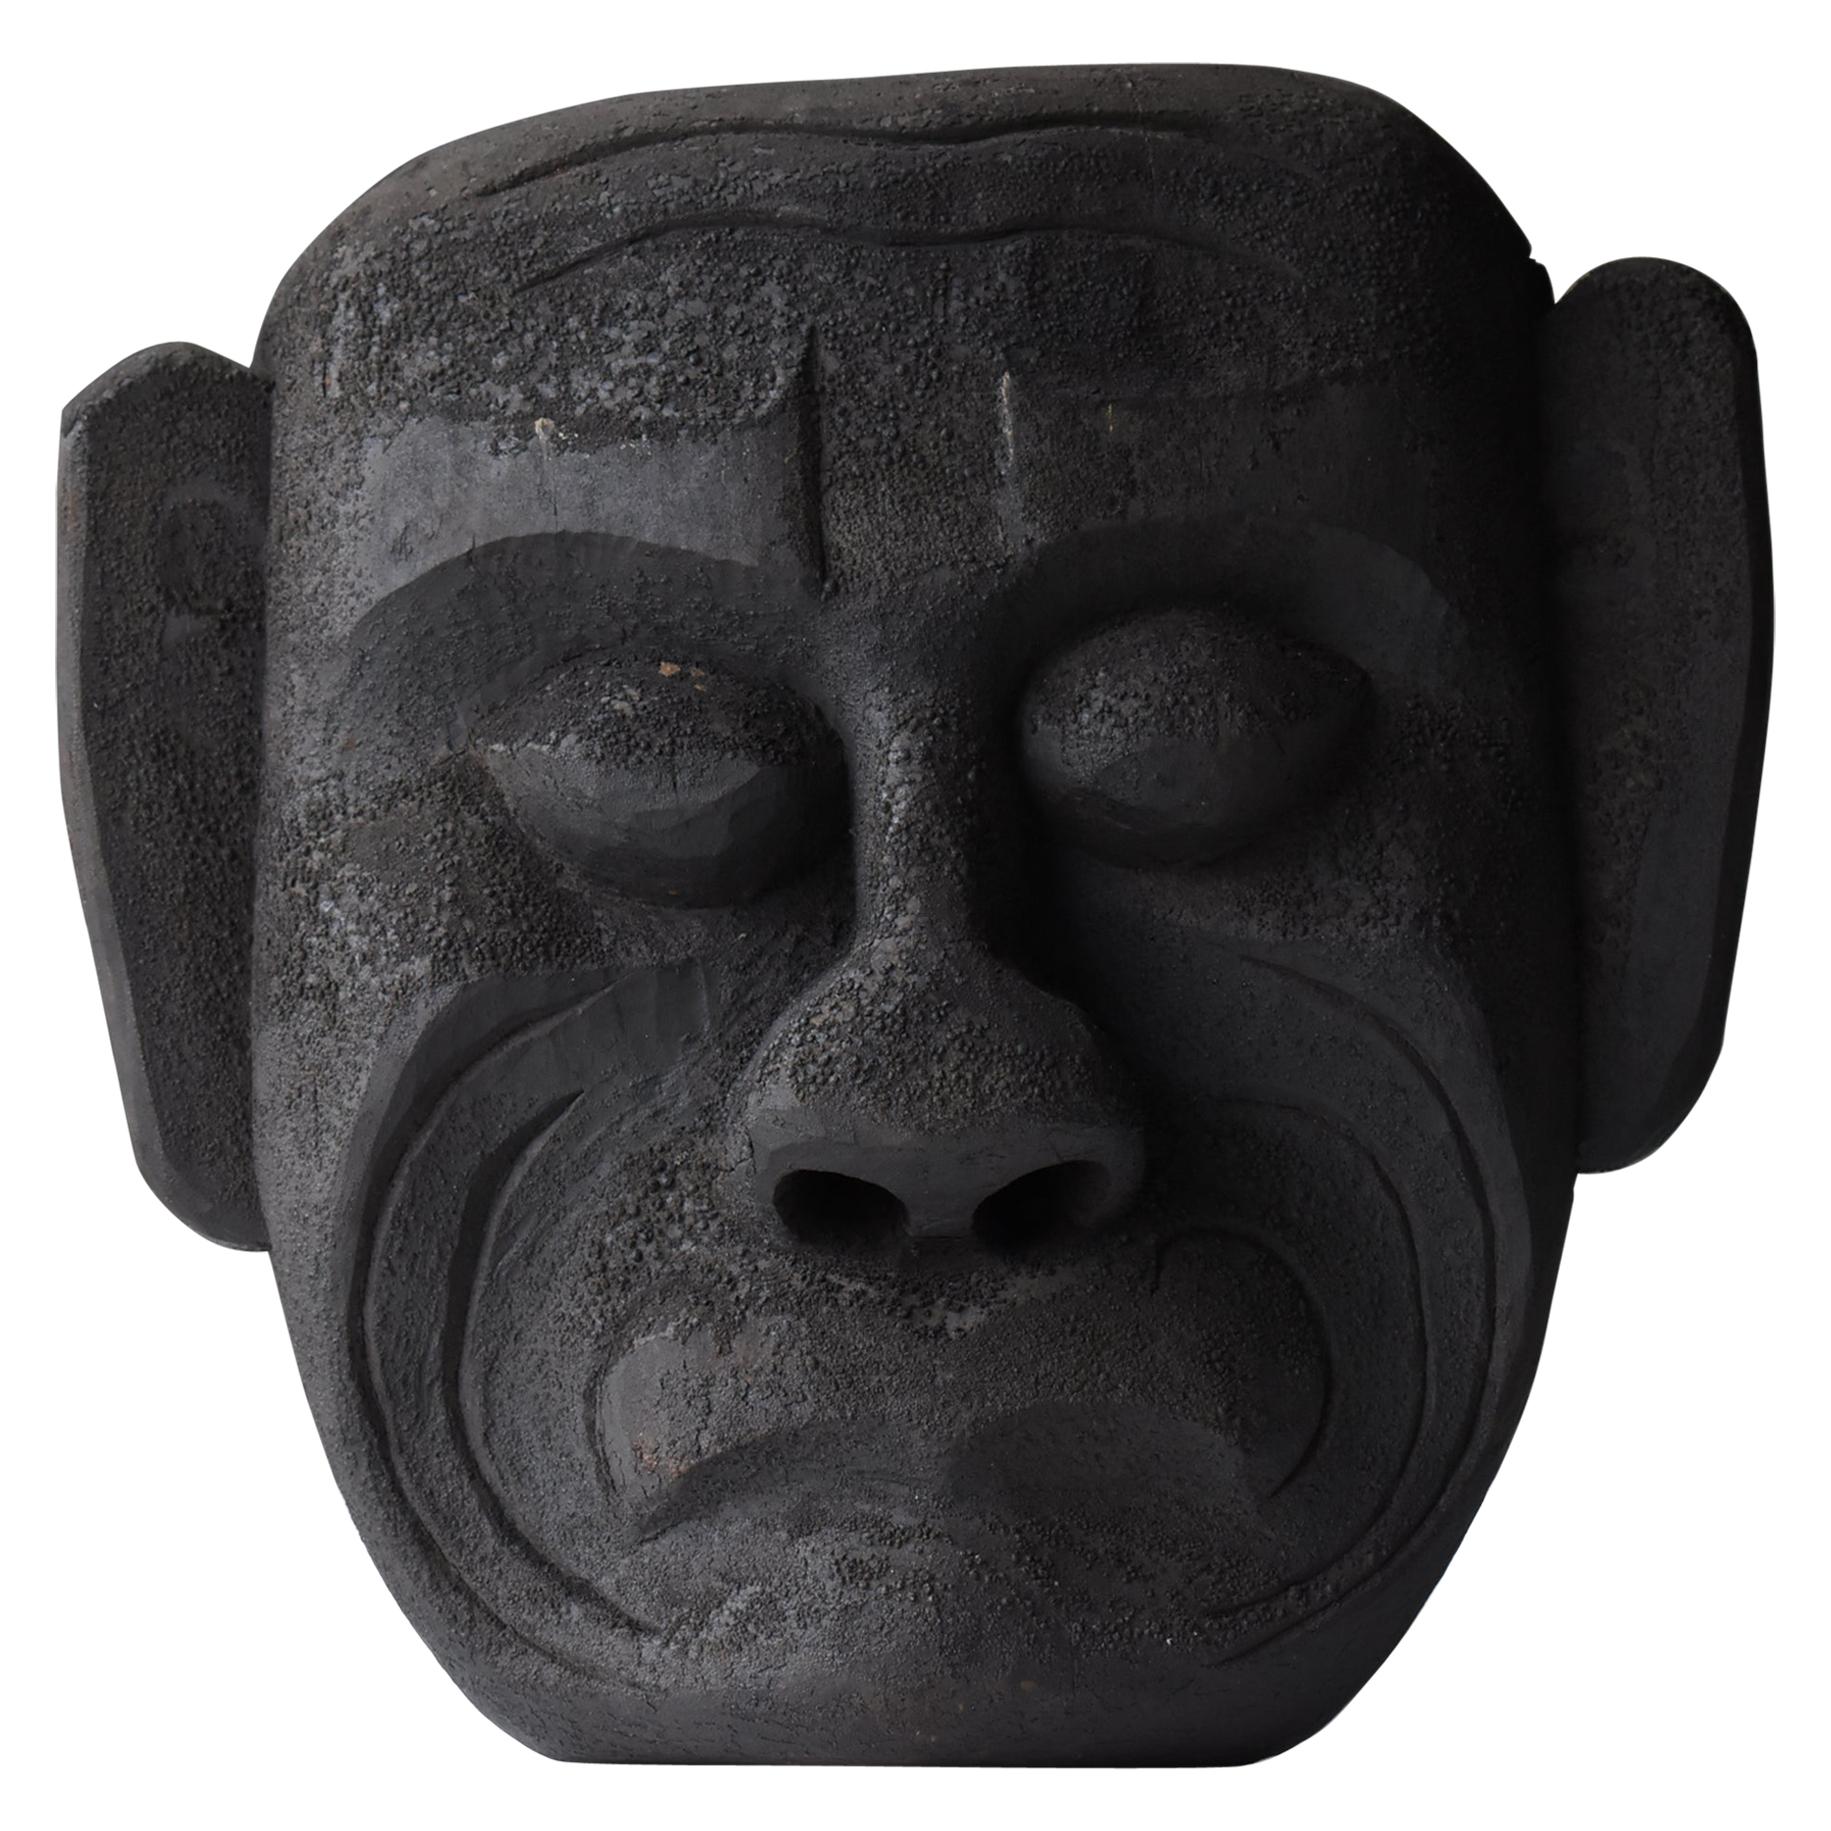 Japanese Old Wood Carving Mask 1800s-1860s/Folk Art Sculpture Wabisabi Object